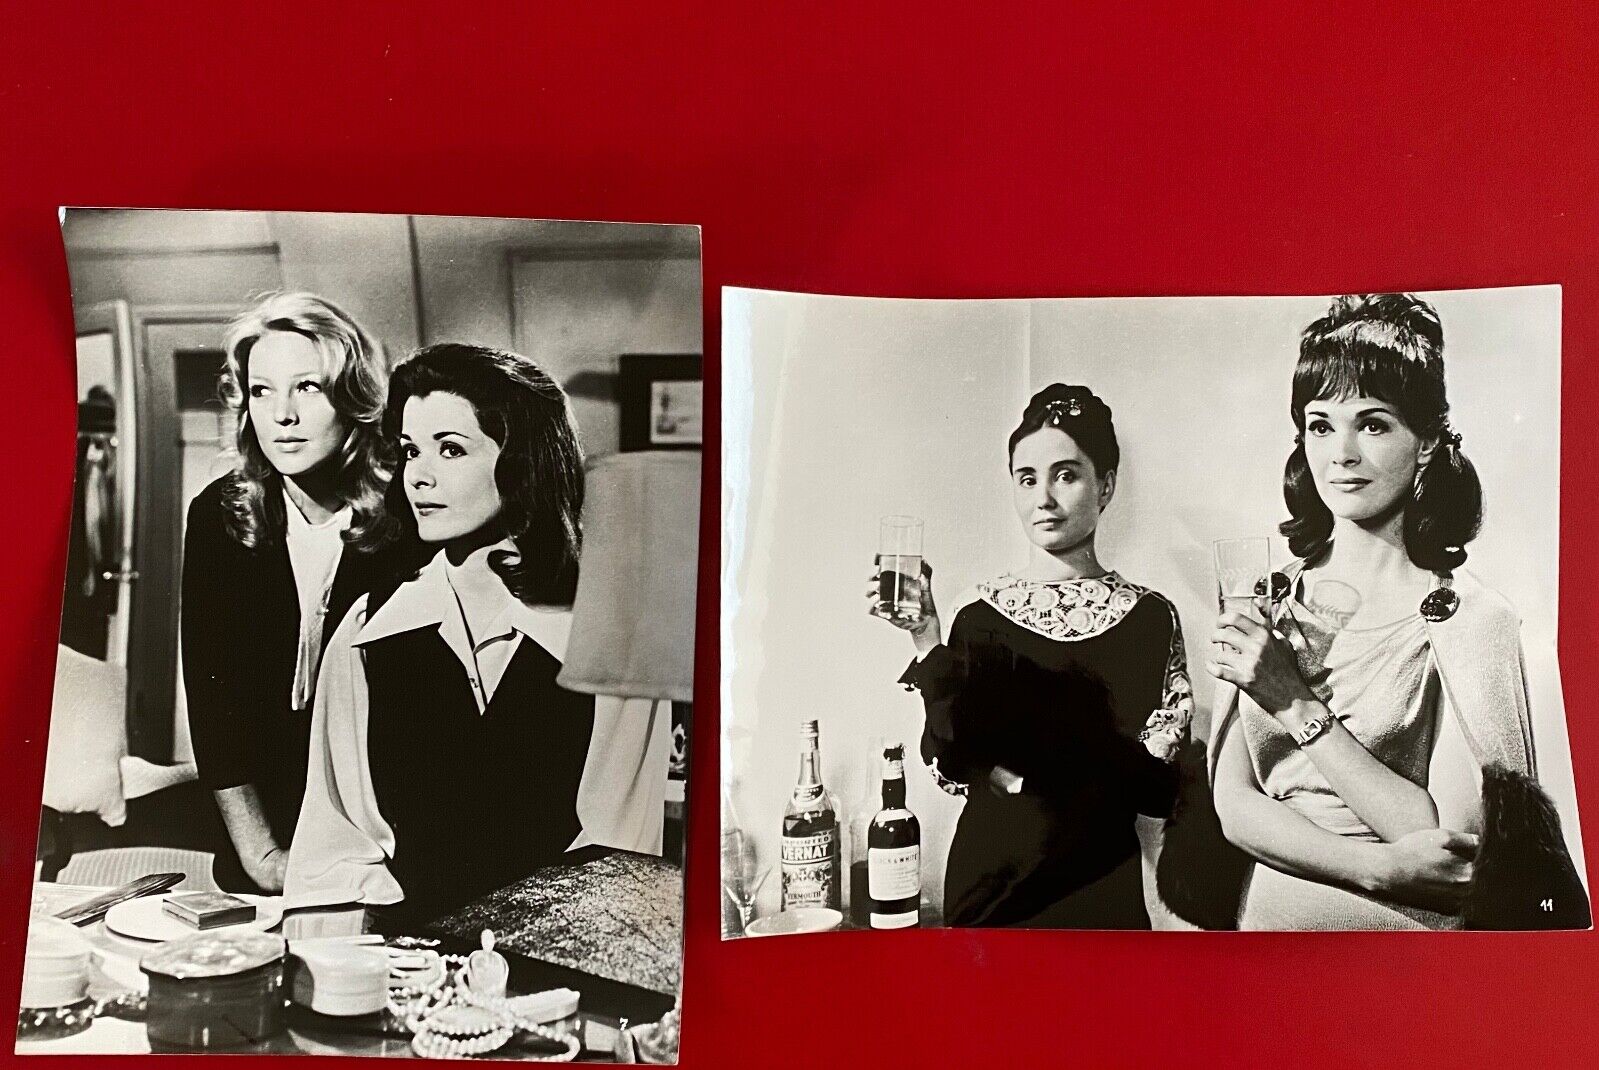 2 X Die Clique 1966 - Walter - Pettet - Film Still Press Photo Poster painting Bundle (Pf - 5